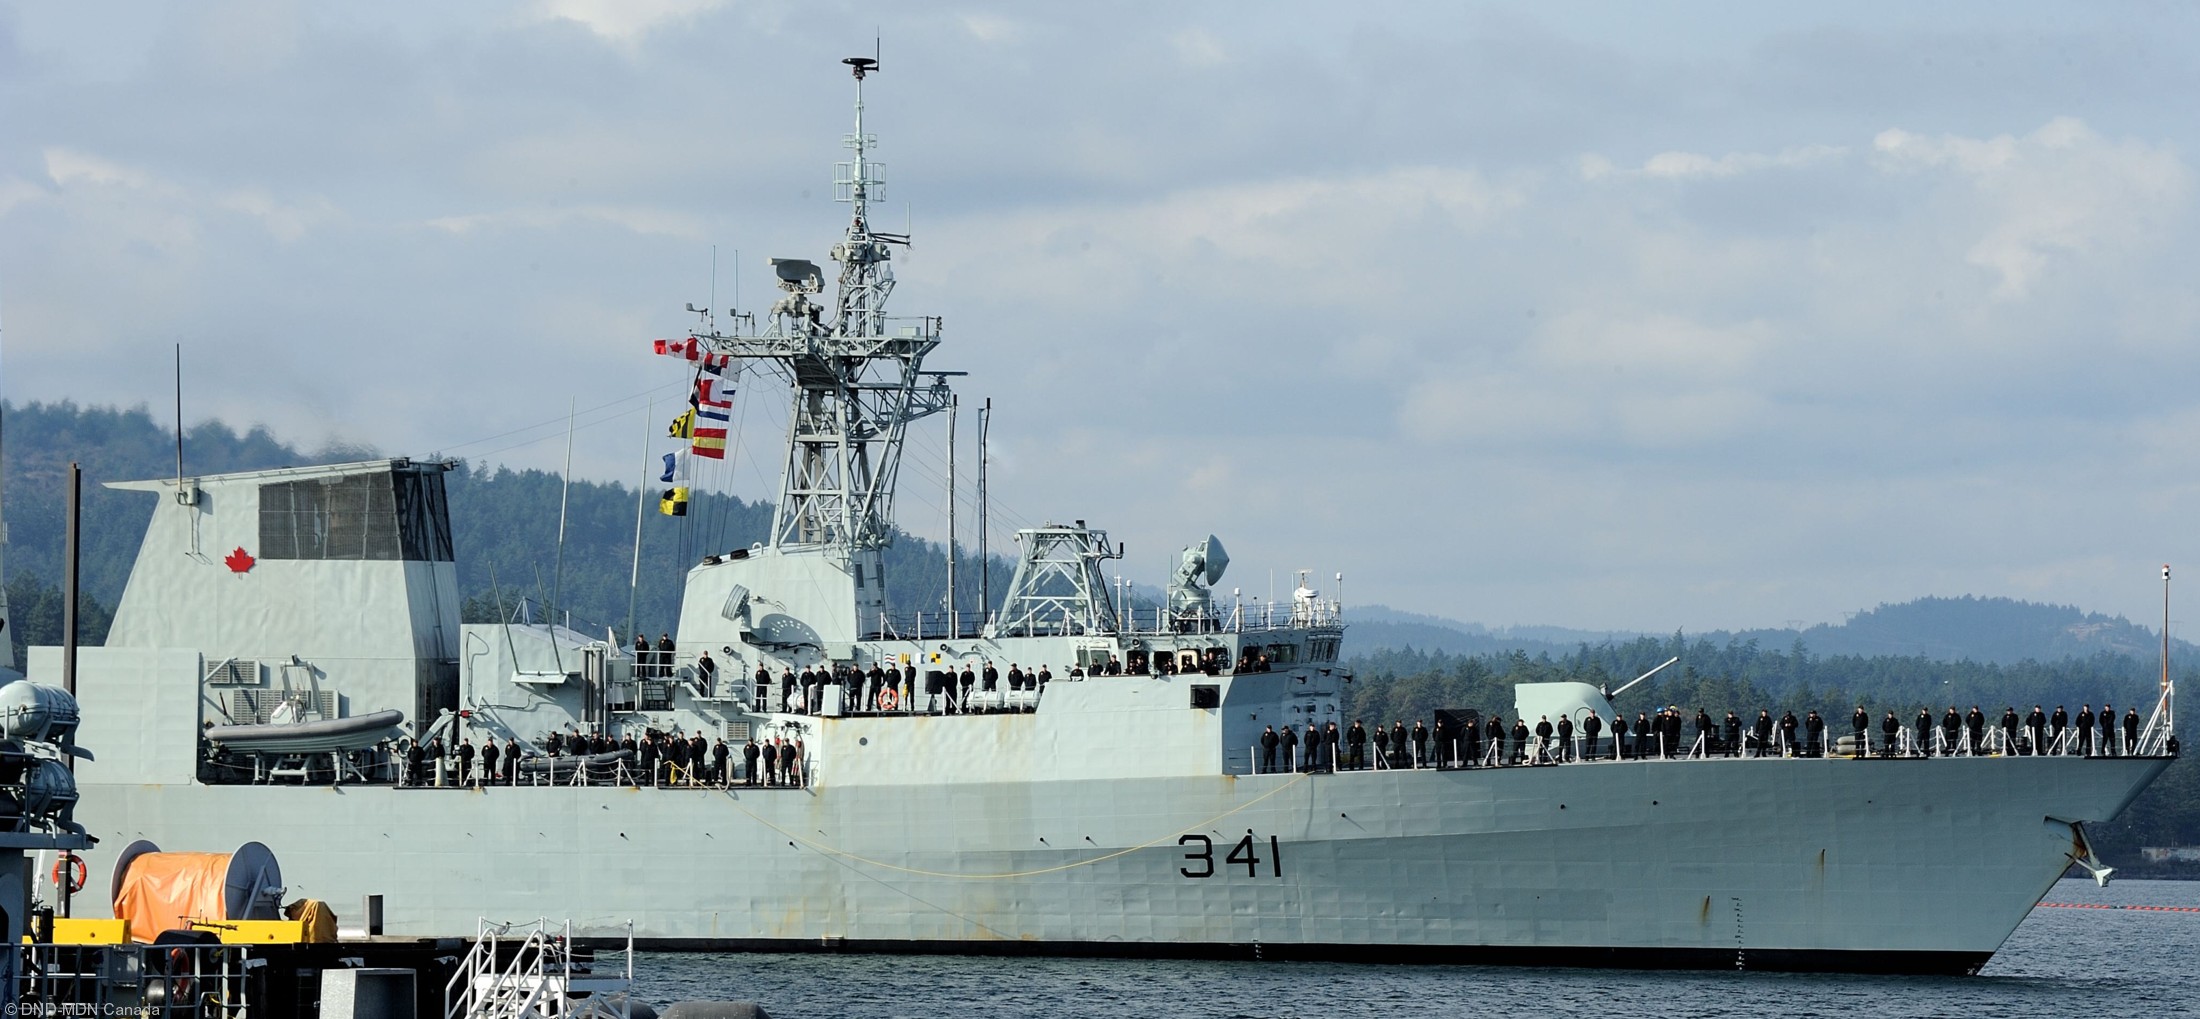 ffh-441 hmcs ottawa halifax class helicopter patrol frigate ncsm royal canadian navy 27